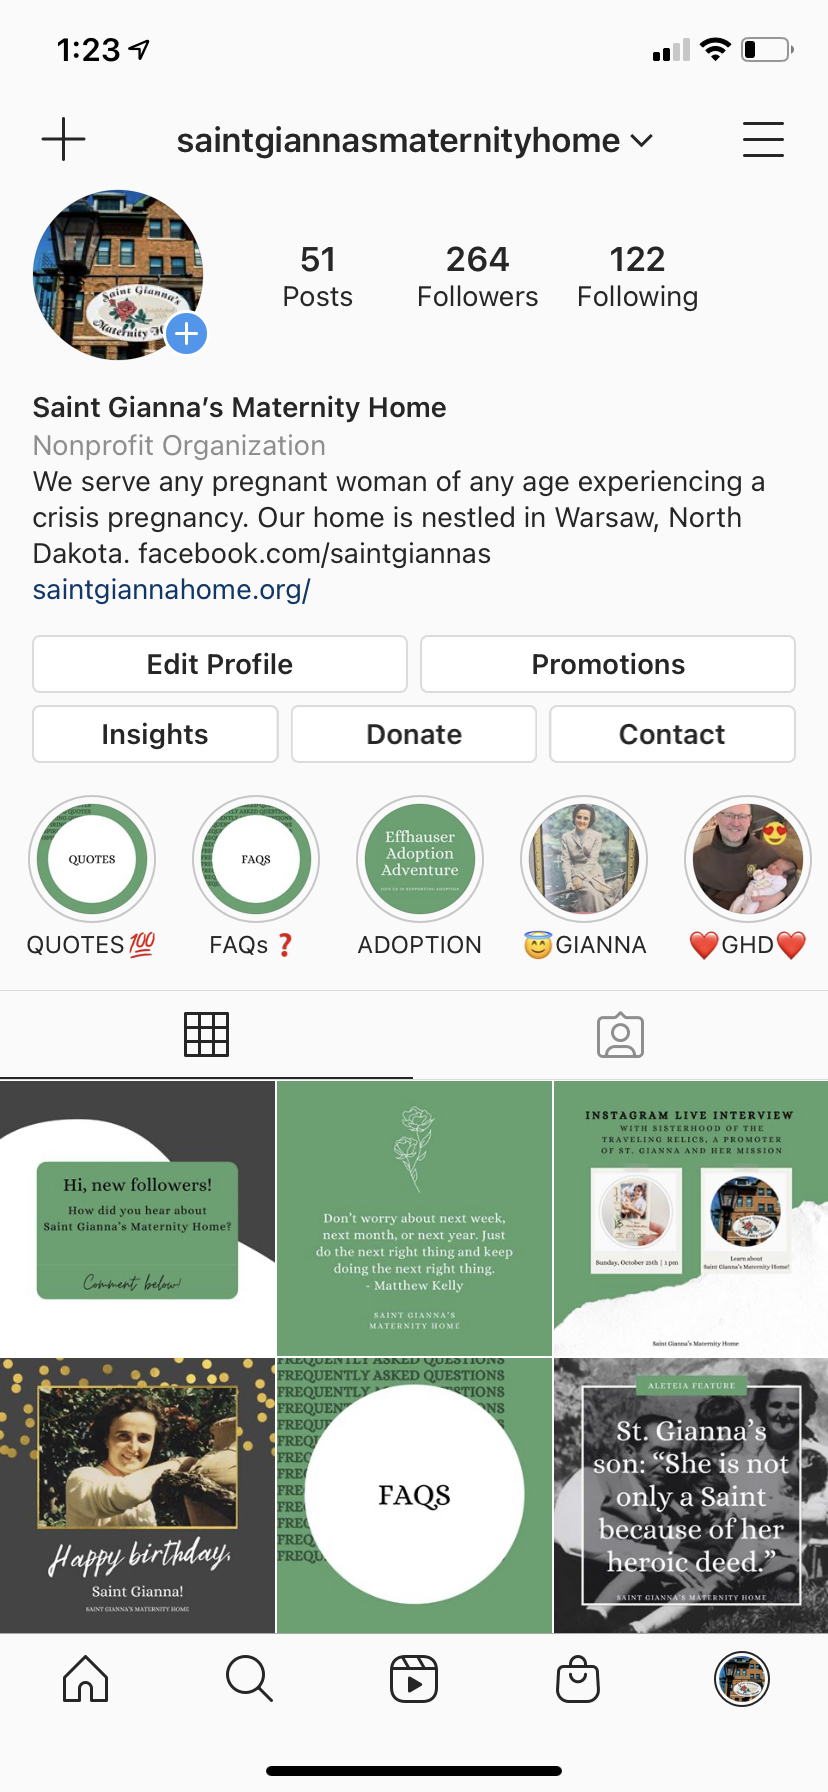 Instagram social media feed for Saint Gianna's Maternity Home, one of HK Media's clients